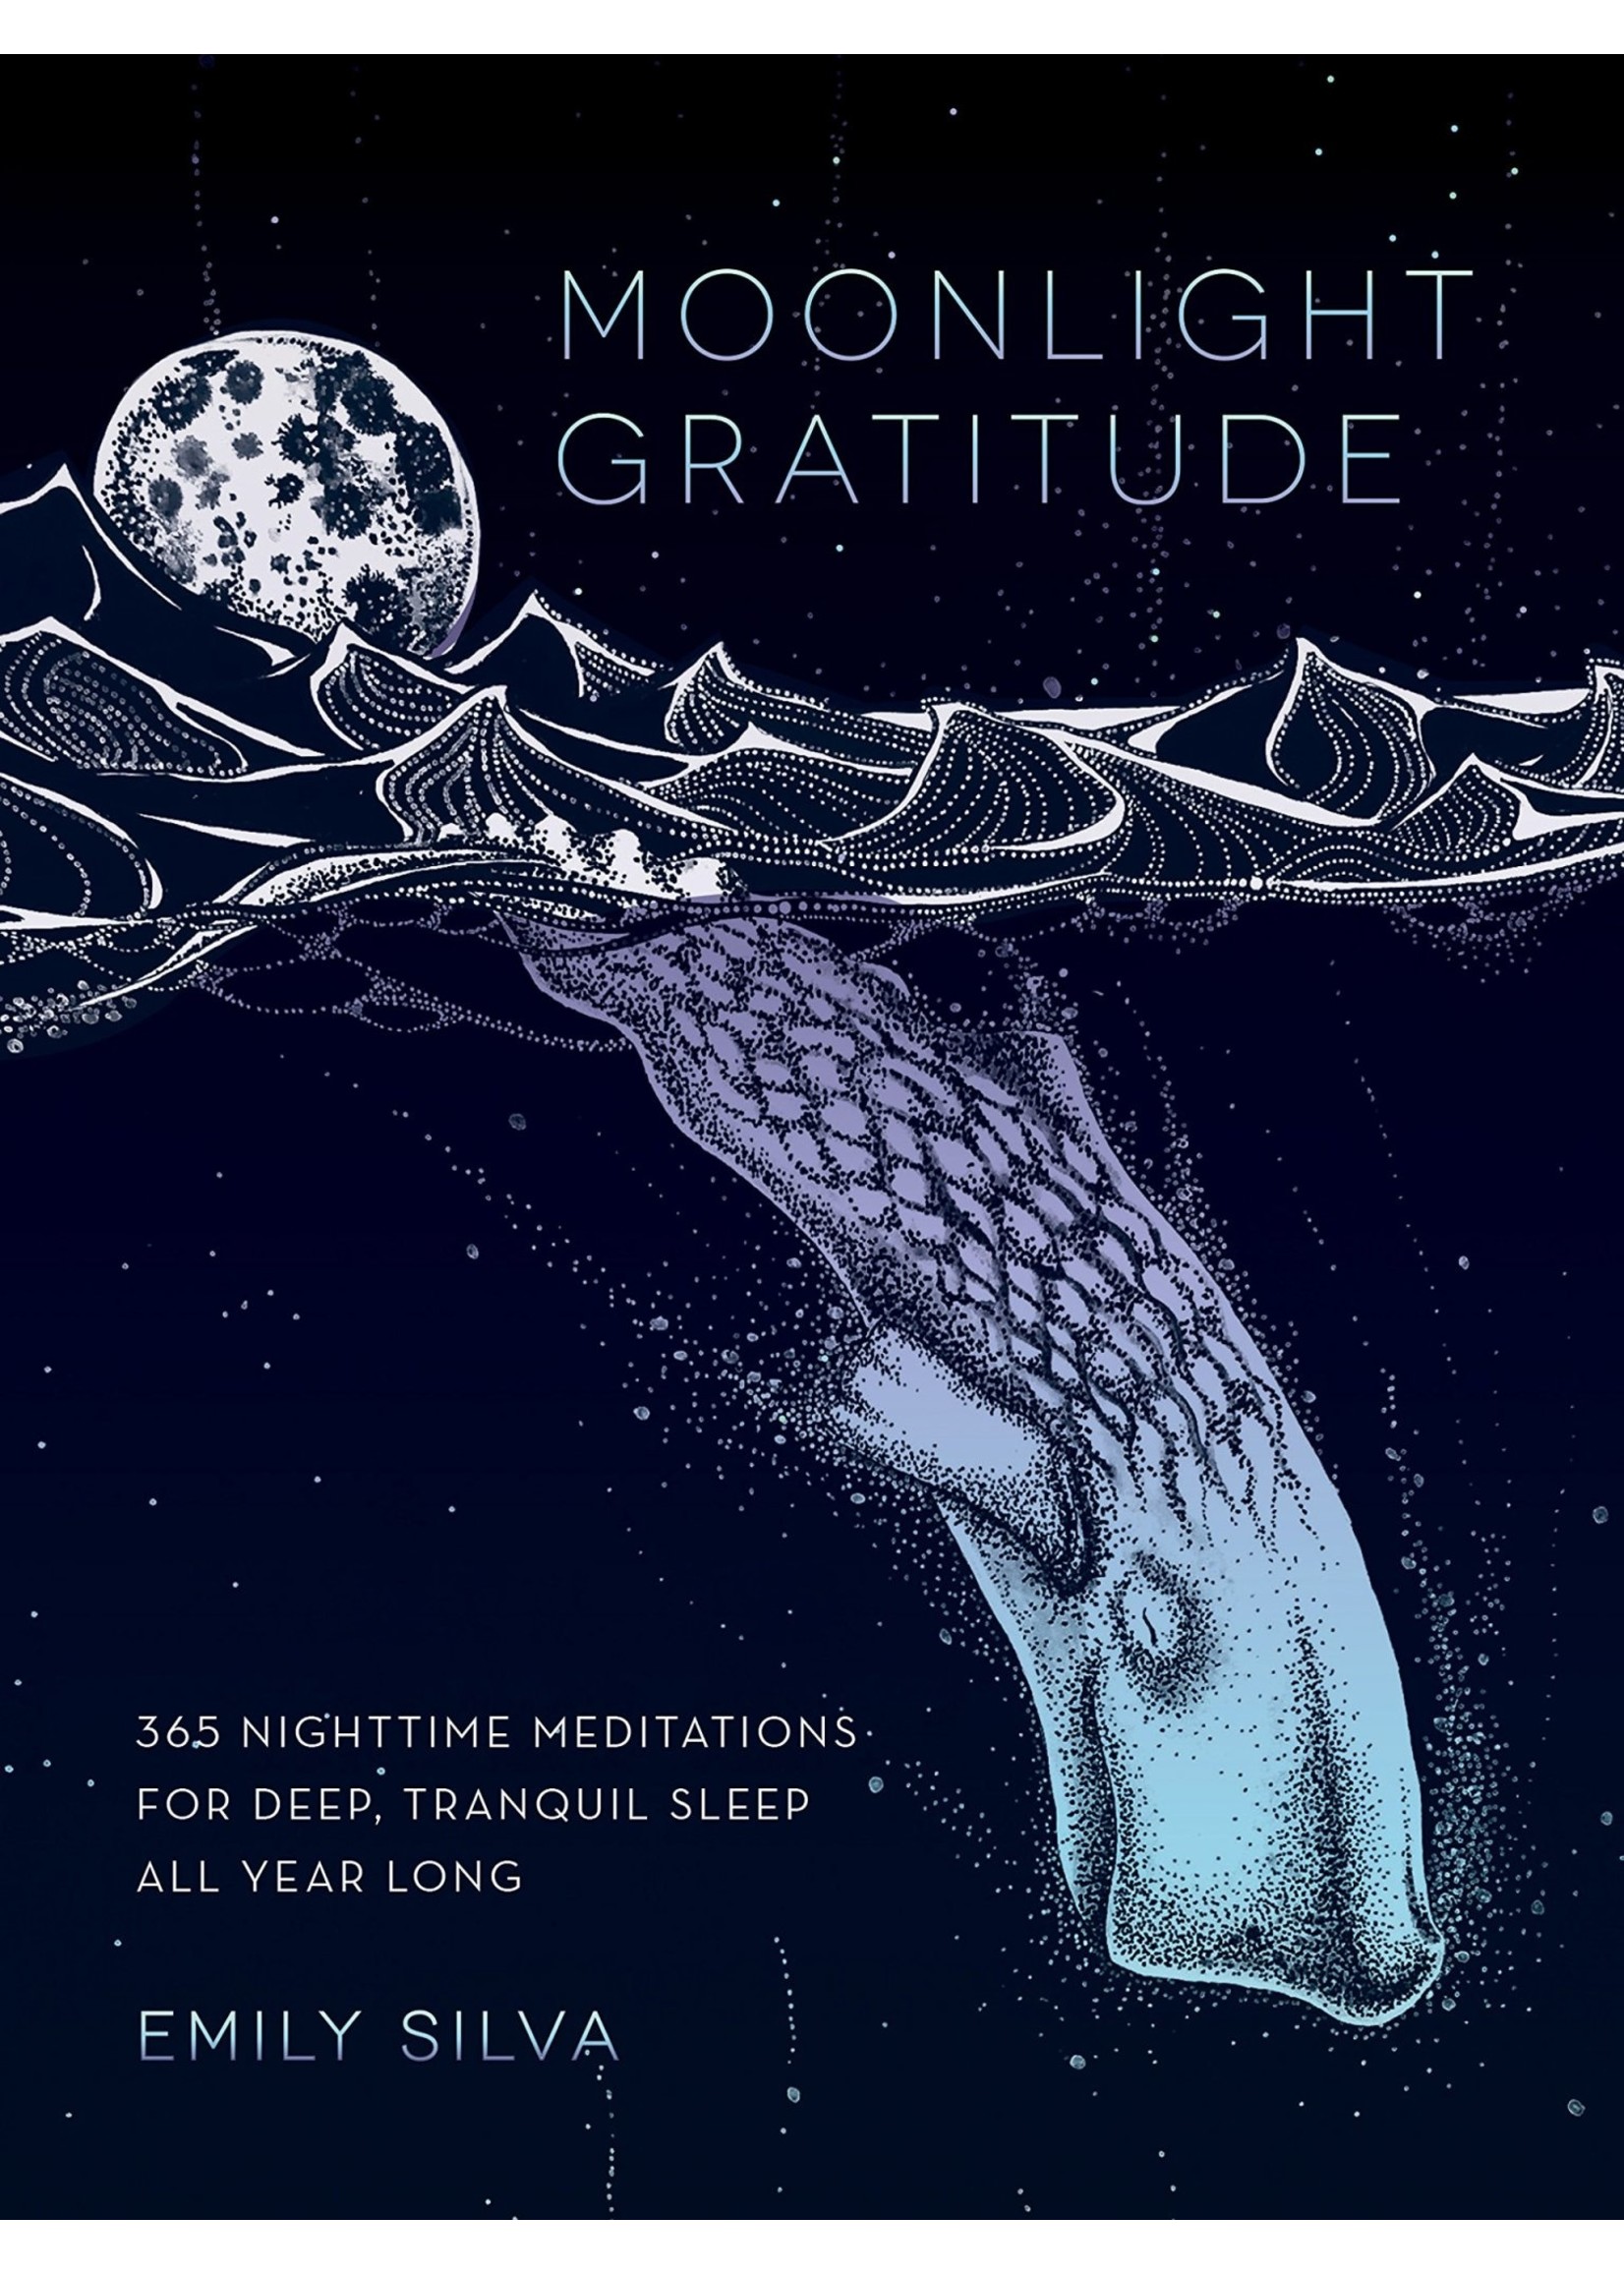 Moonlight Gratitude-365 Nighttime Meditations for Deep, Tranquil Sleep All Year Long